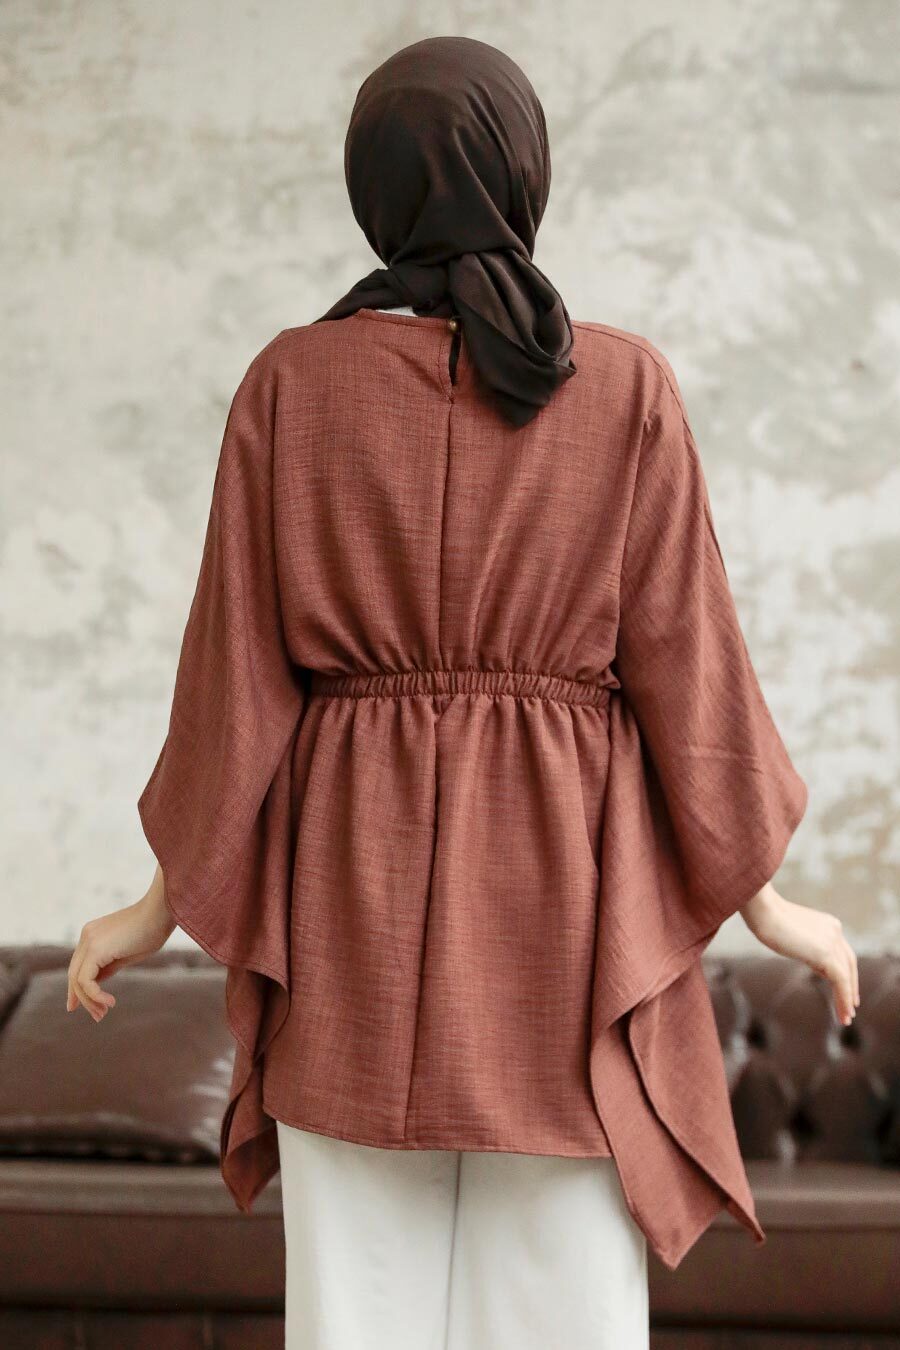 Neva Style - Brown Hijab For Women Poncho 41259KH